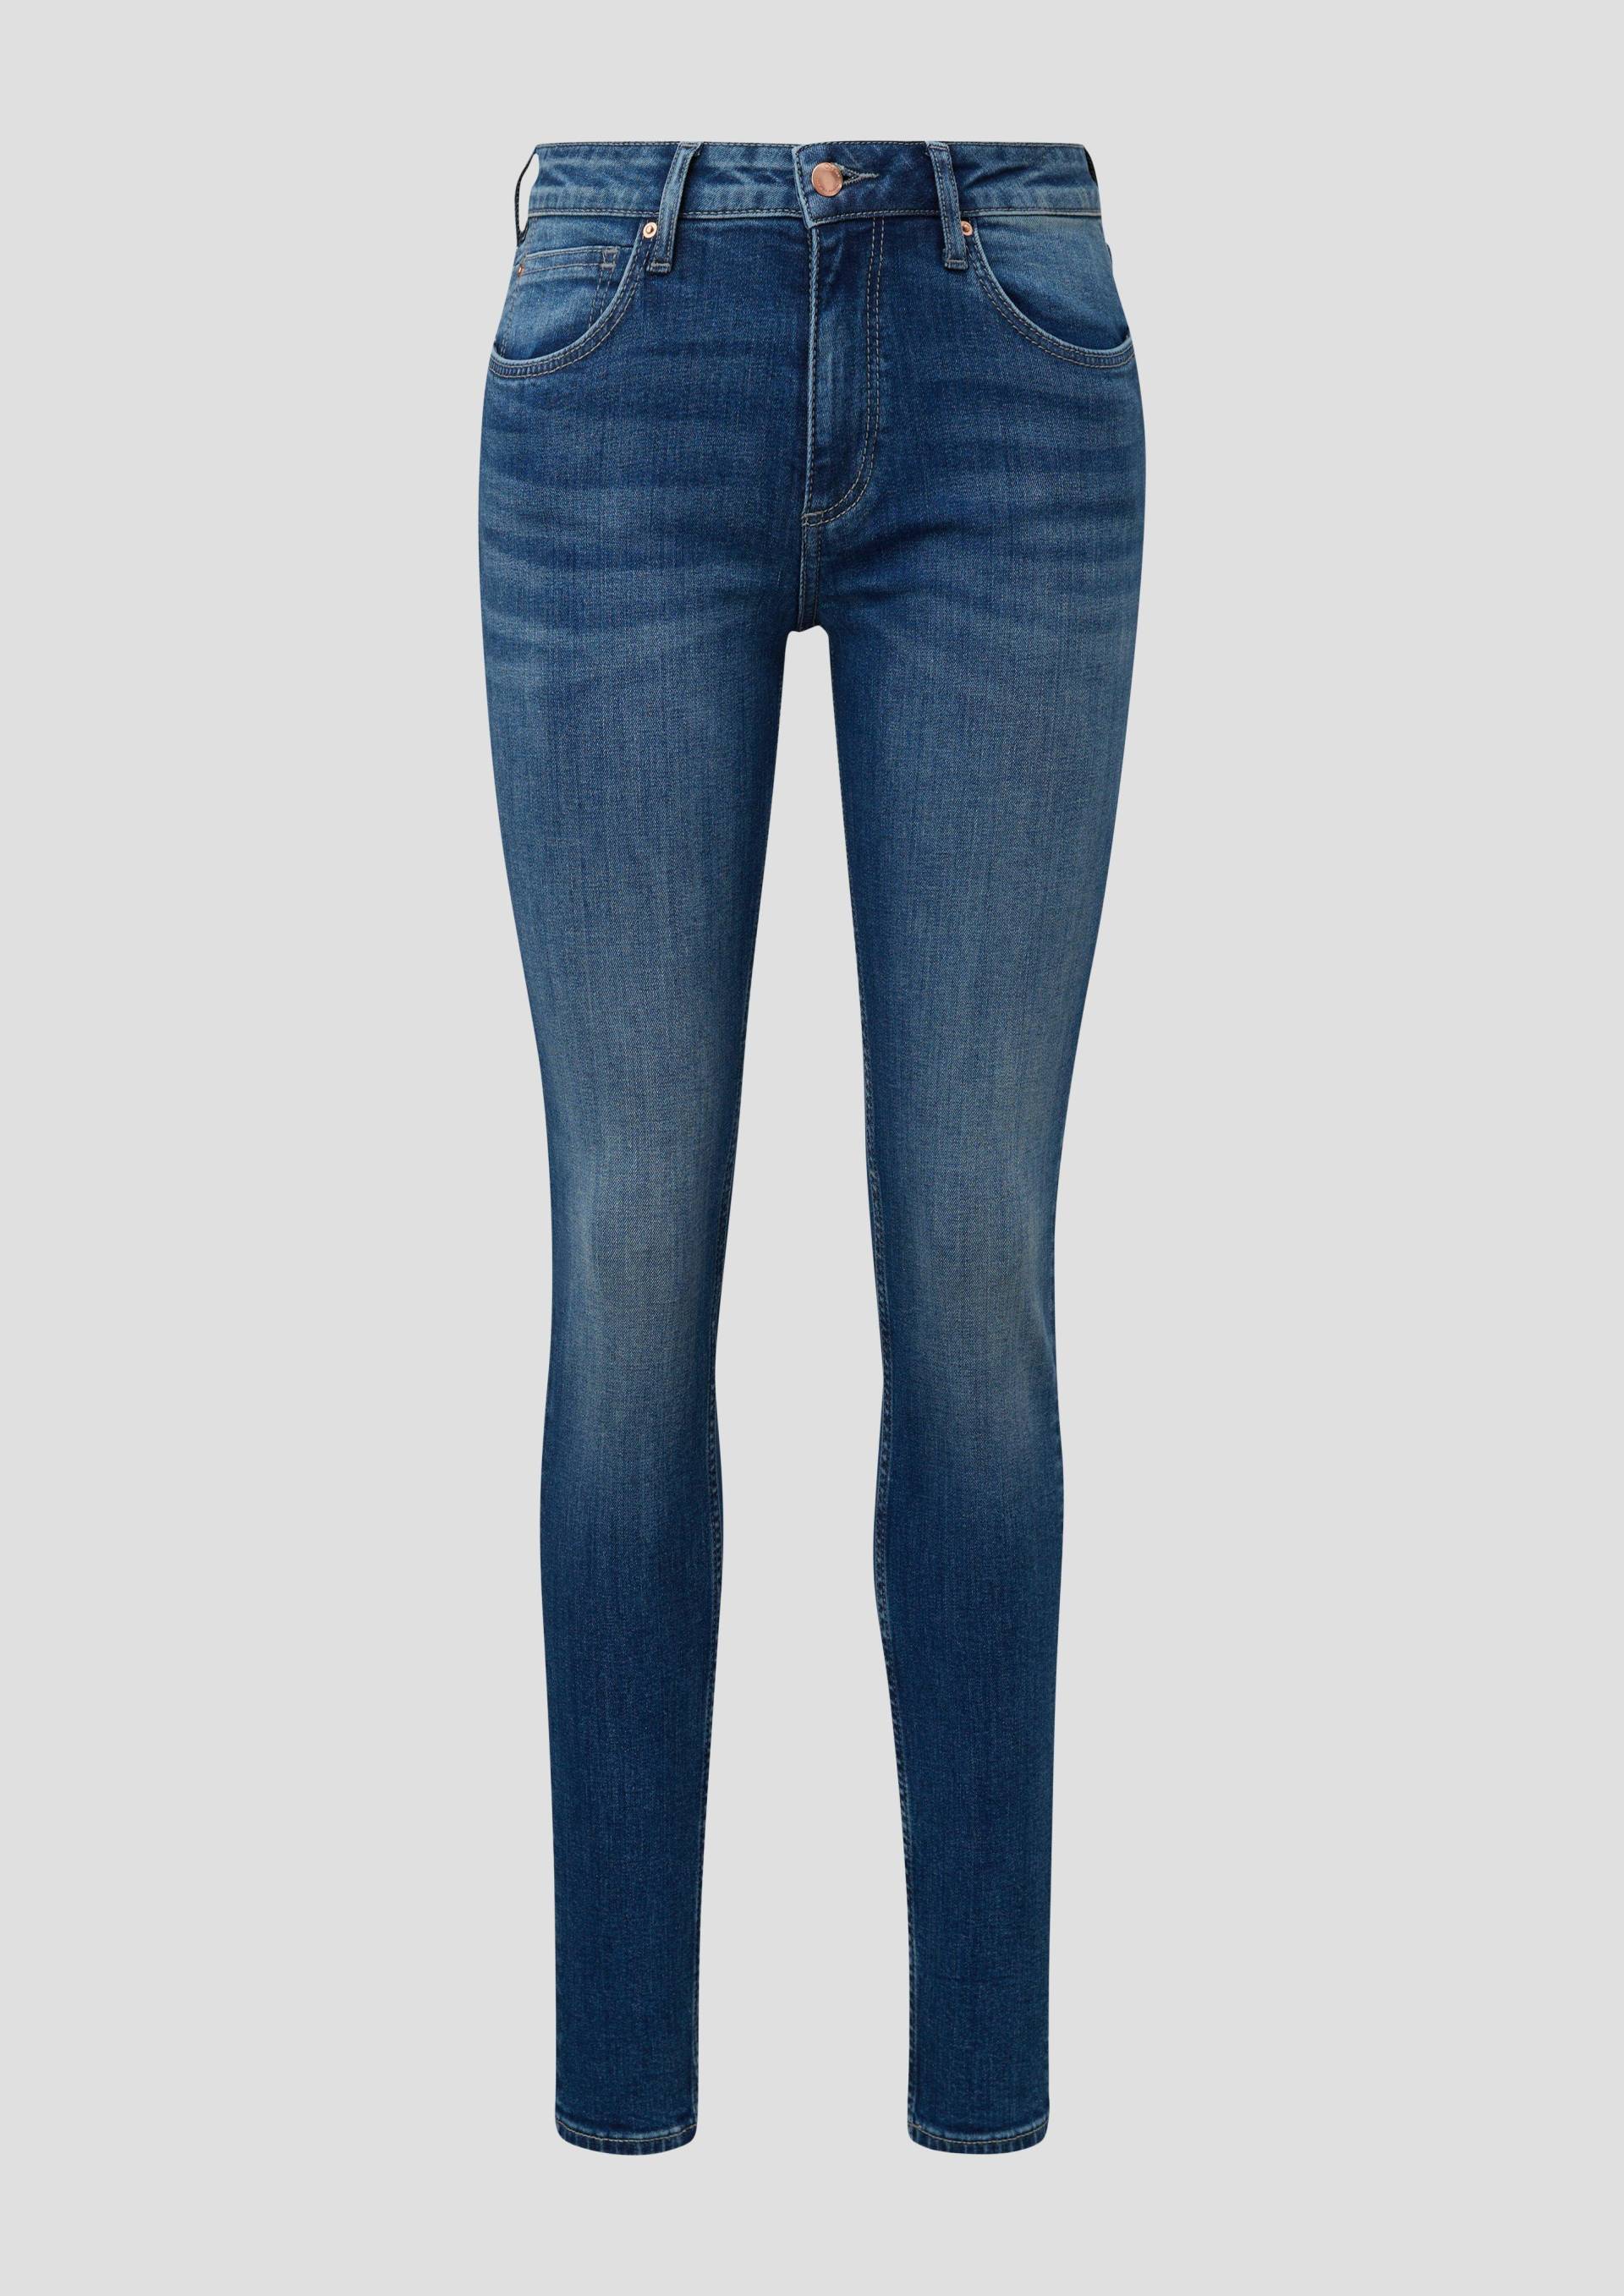 QS - Sadie Jeans / Skinny Fit / Mid Rise / Skinny Leg / Baumwollstretch, Damen, blau von QS